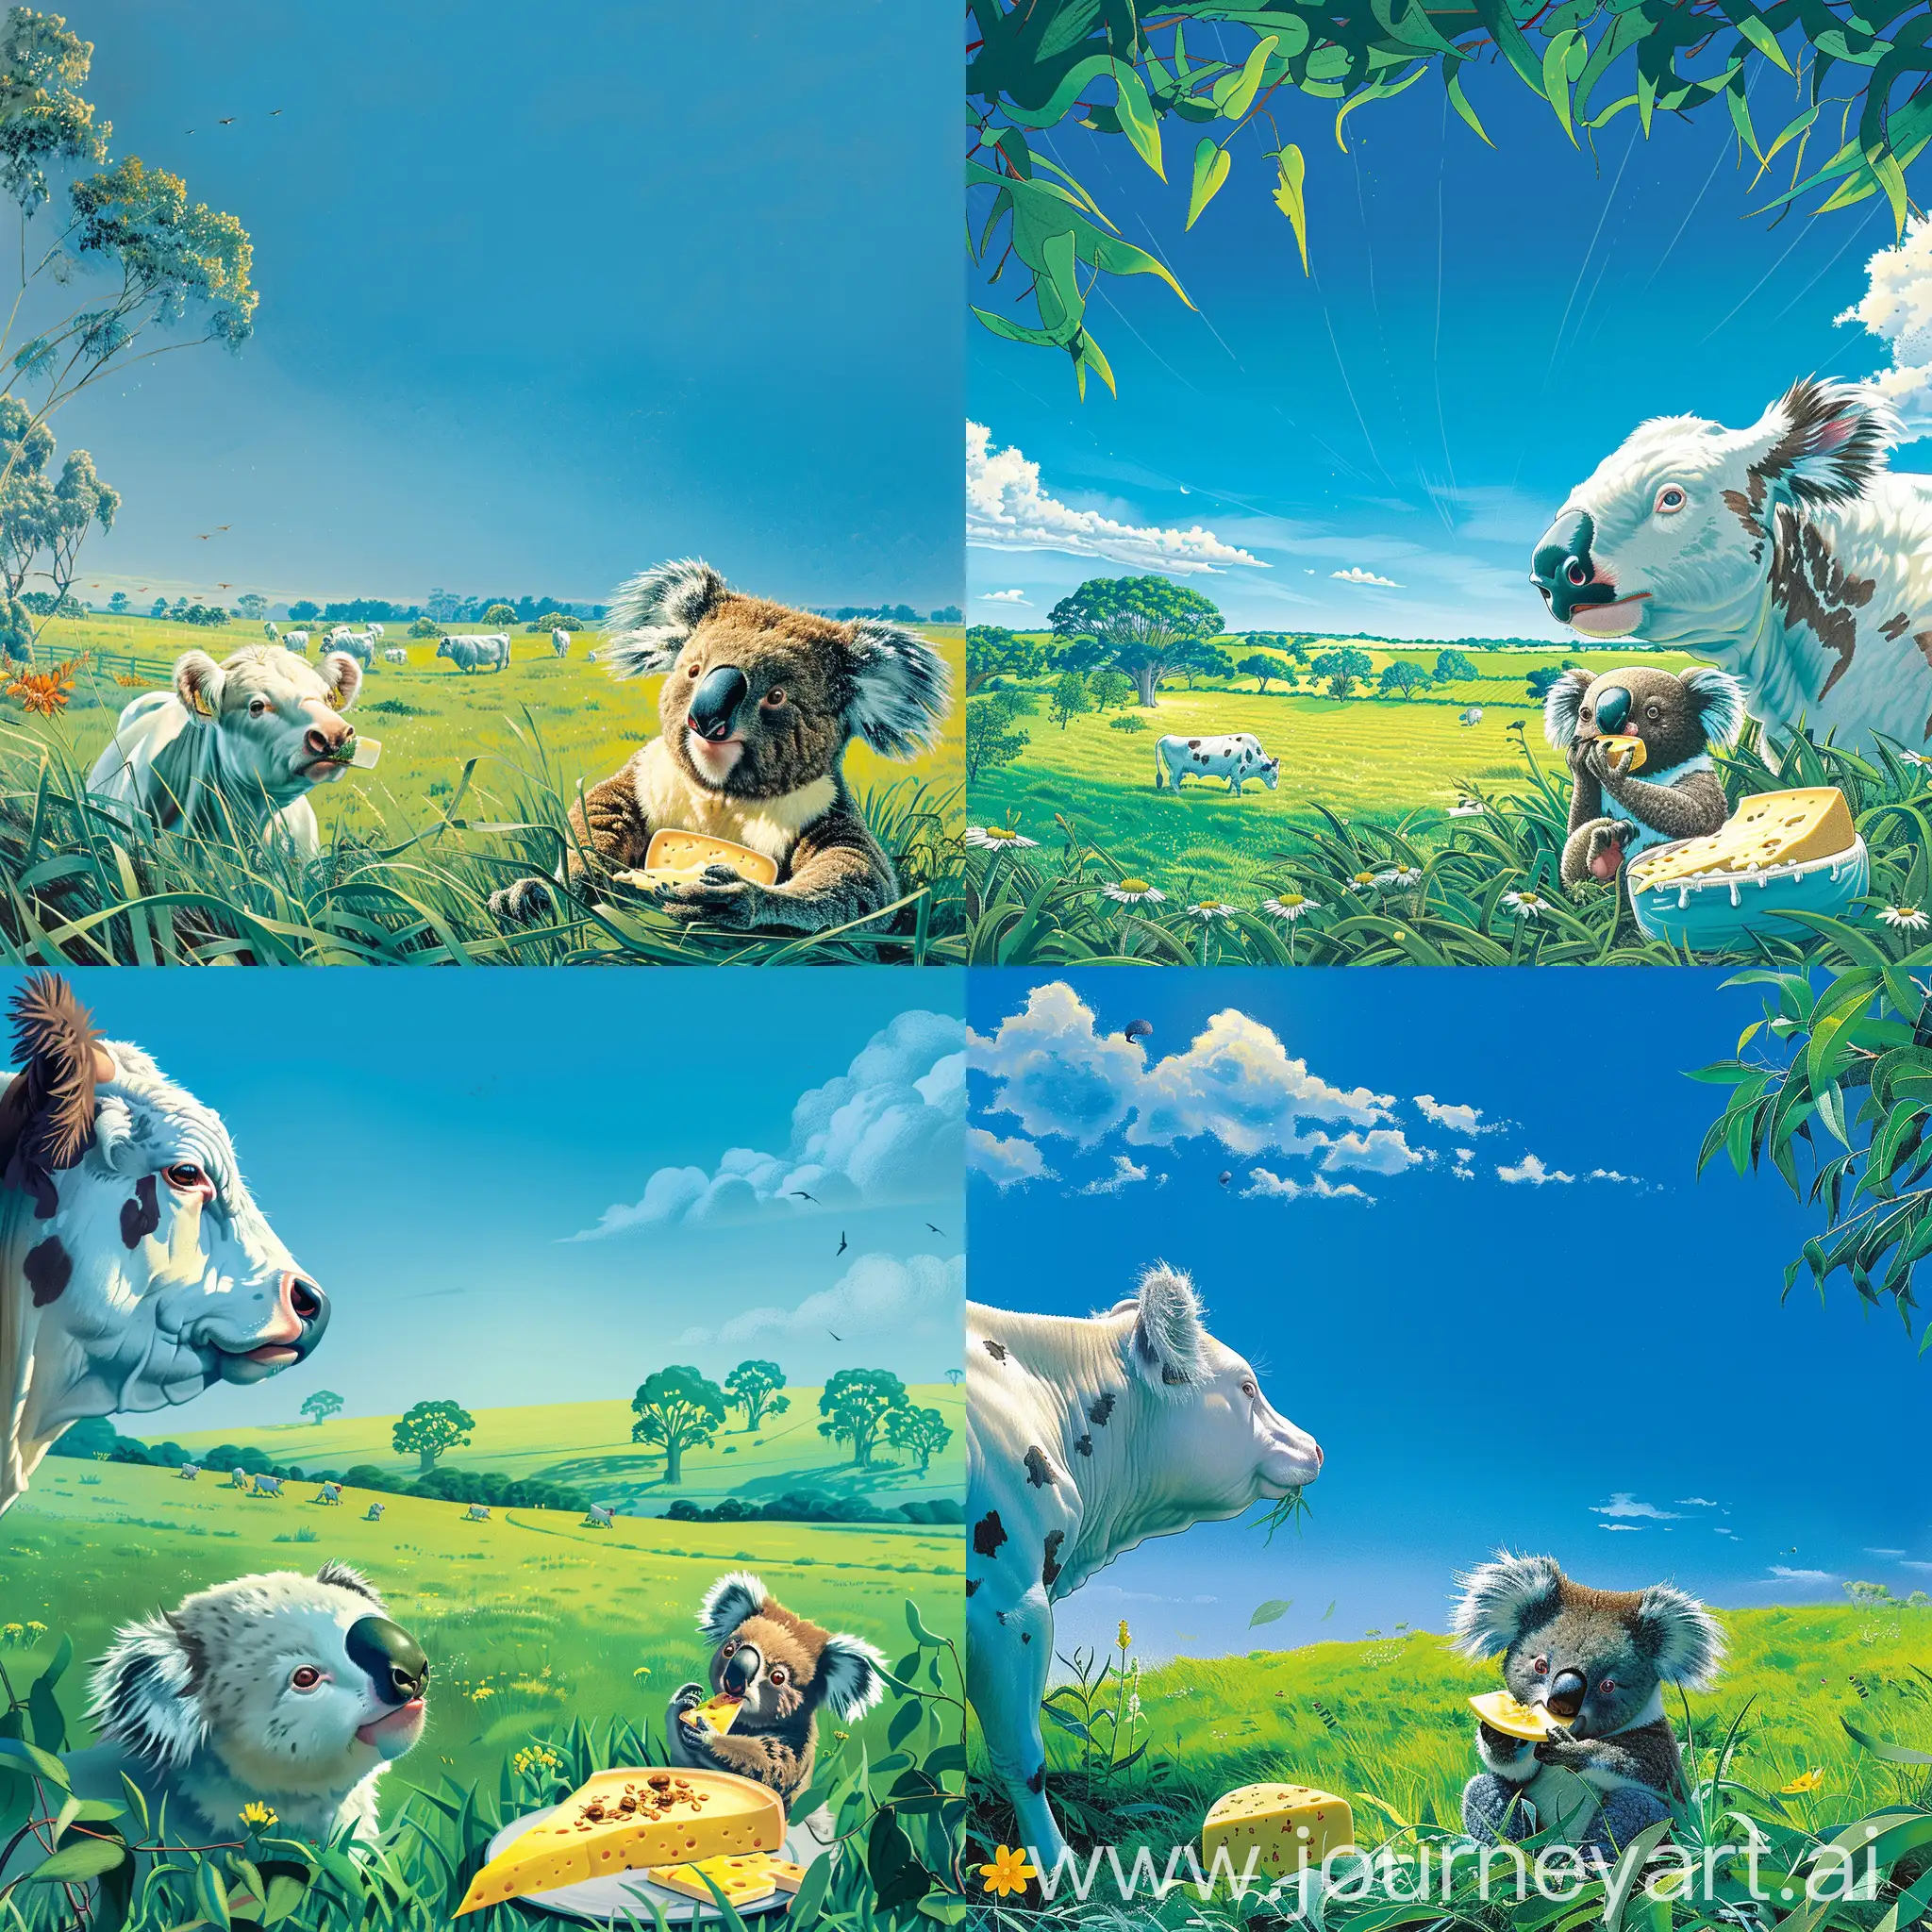 Idyllic-Australian-Countryside-Holstein-Friesian-Cow-and-Koala-Enjoying-Cheese